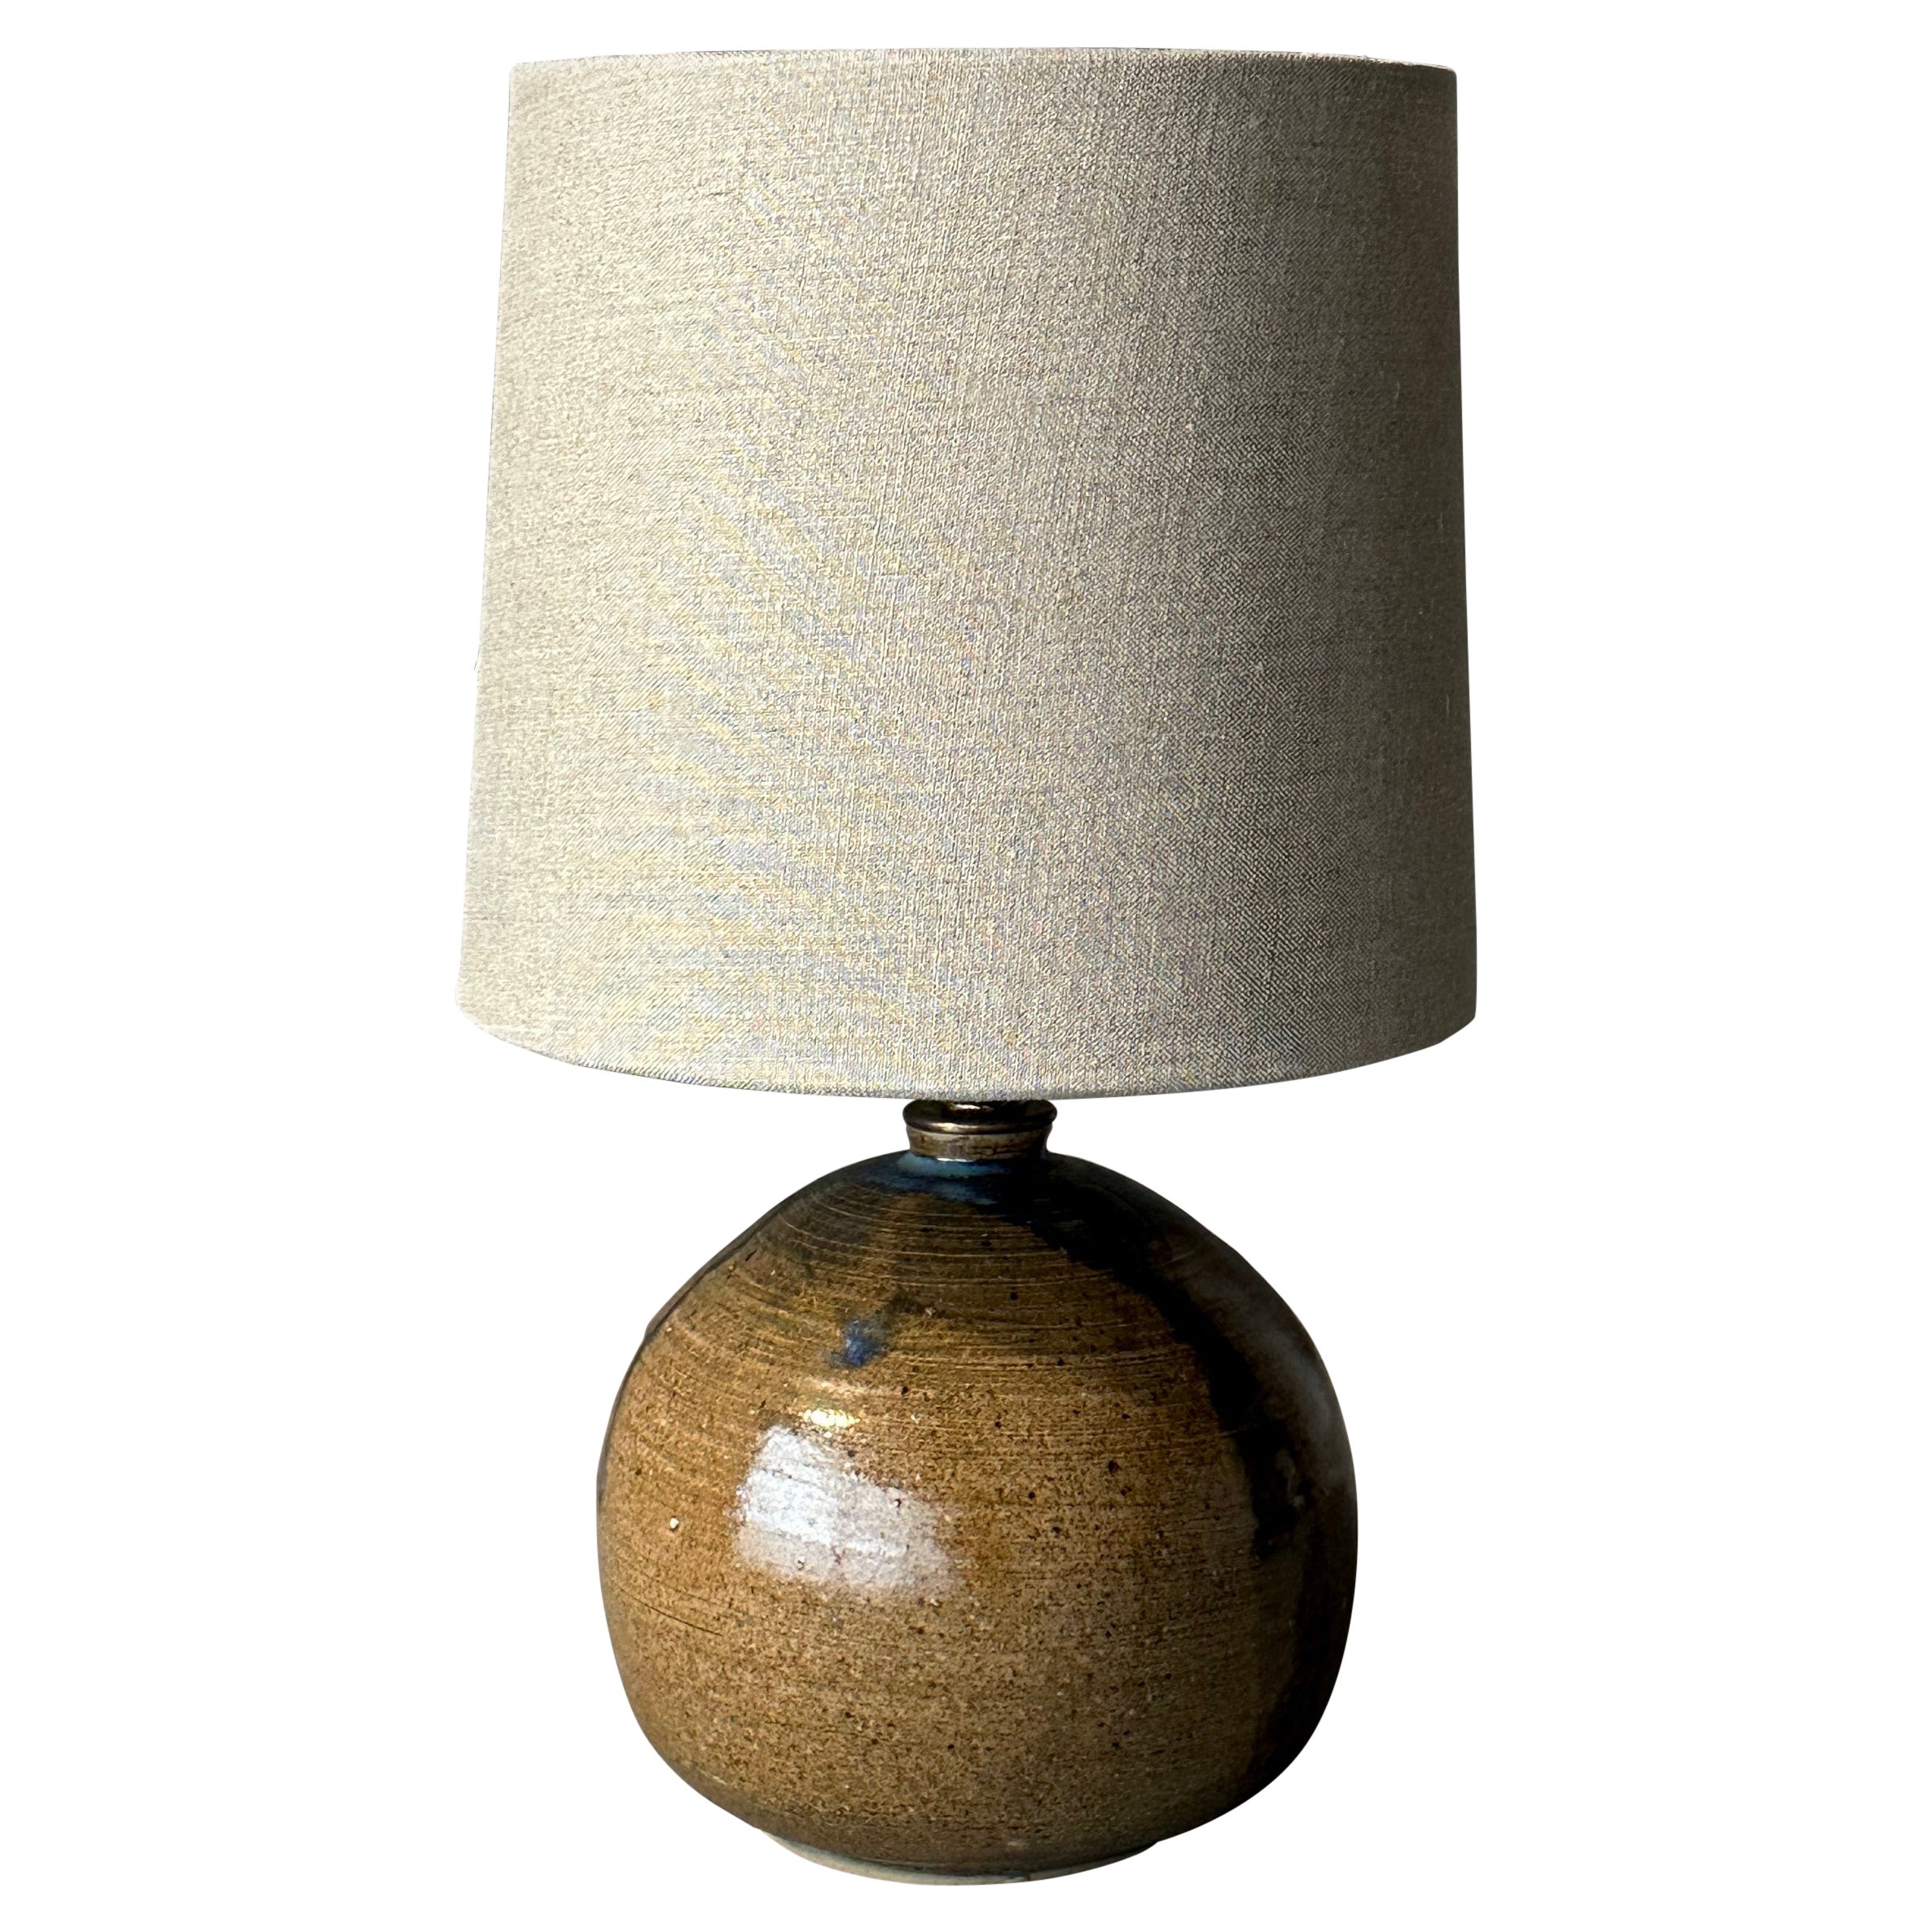 Ceramic Lamp For Sale